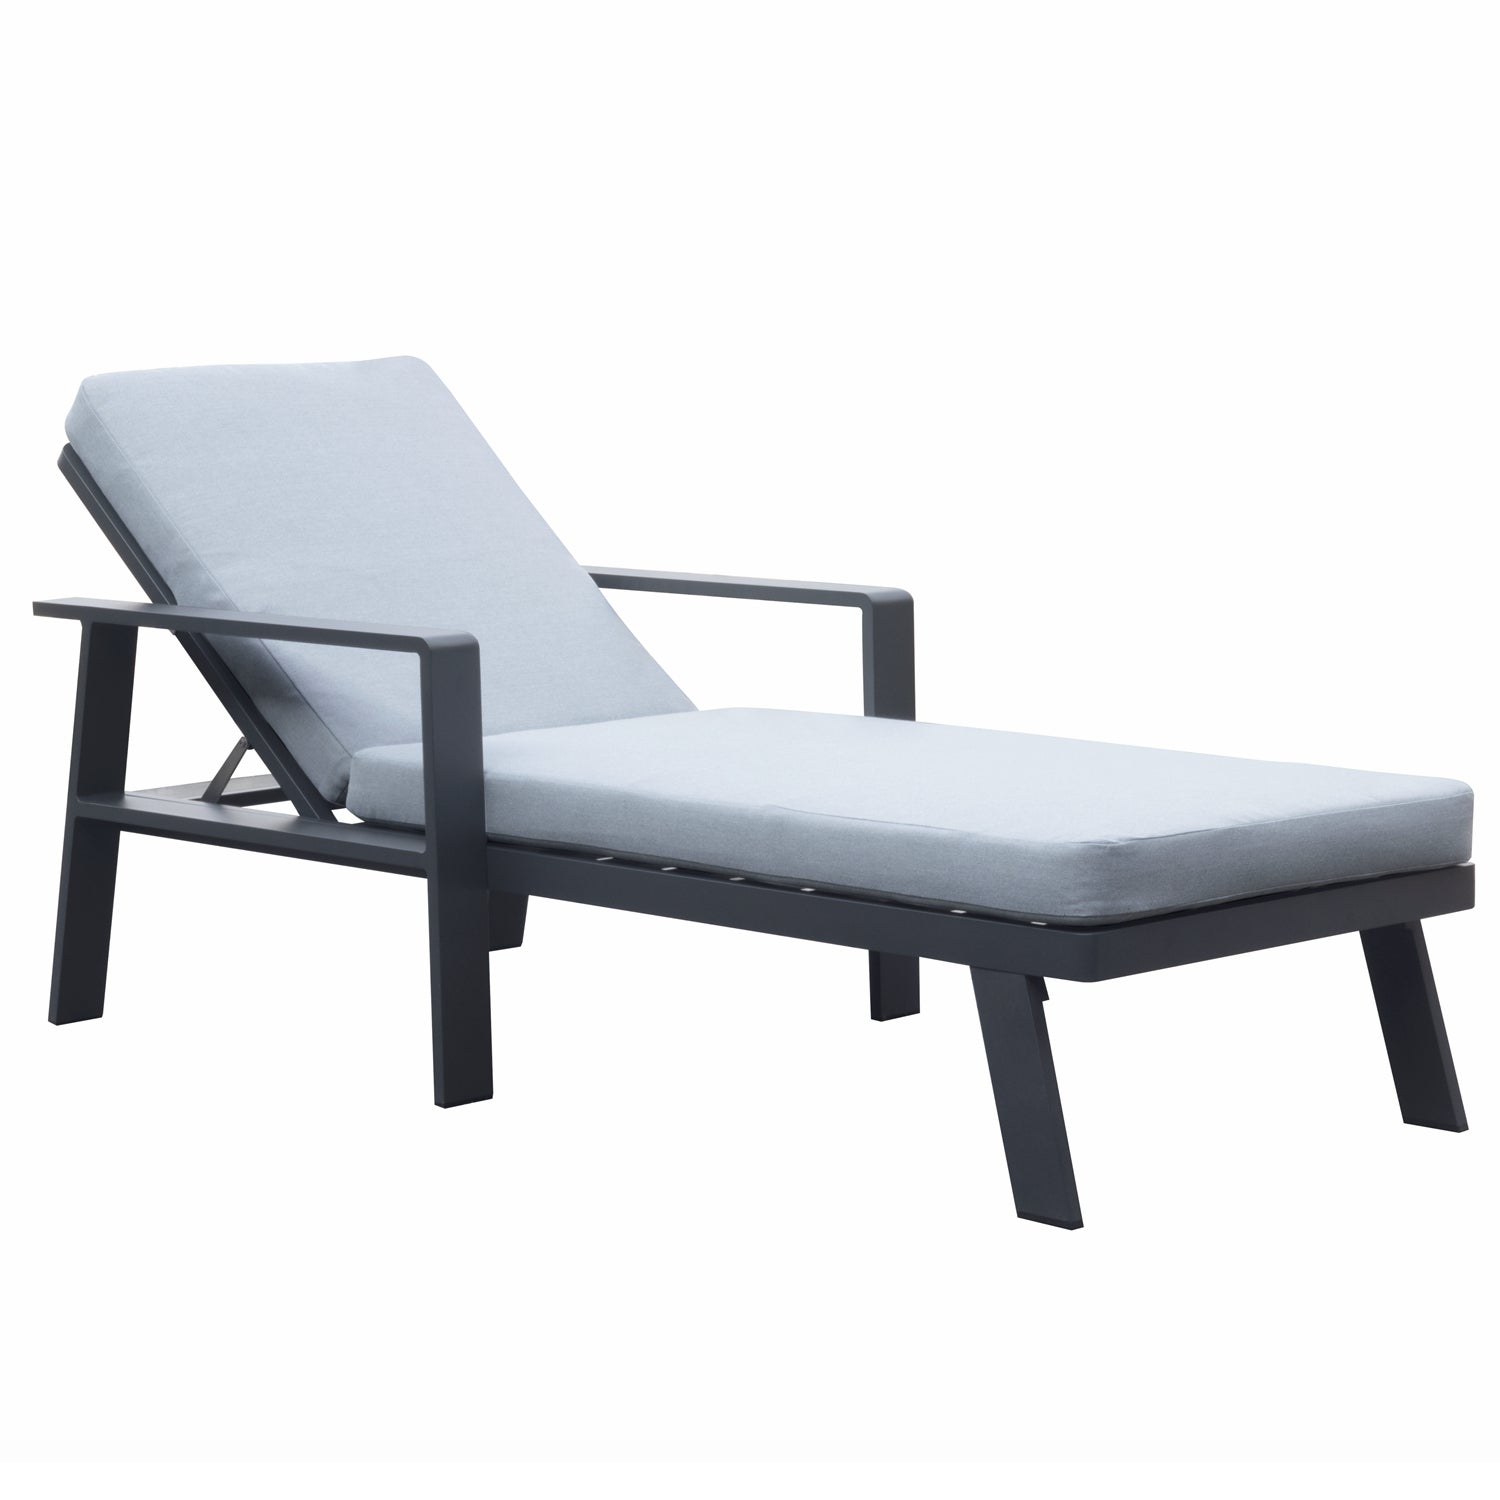 HIGOLD Nofi Aluminum Outdoor Chaise Lounge - Series 3801